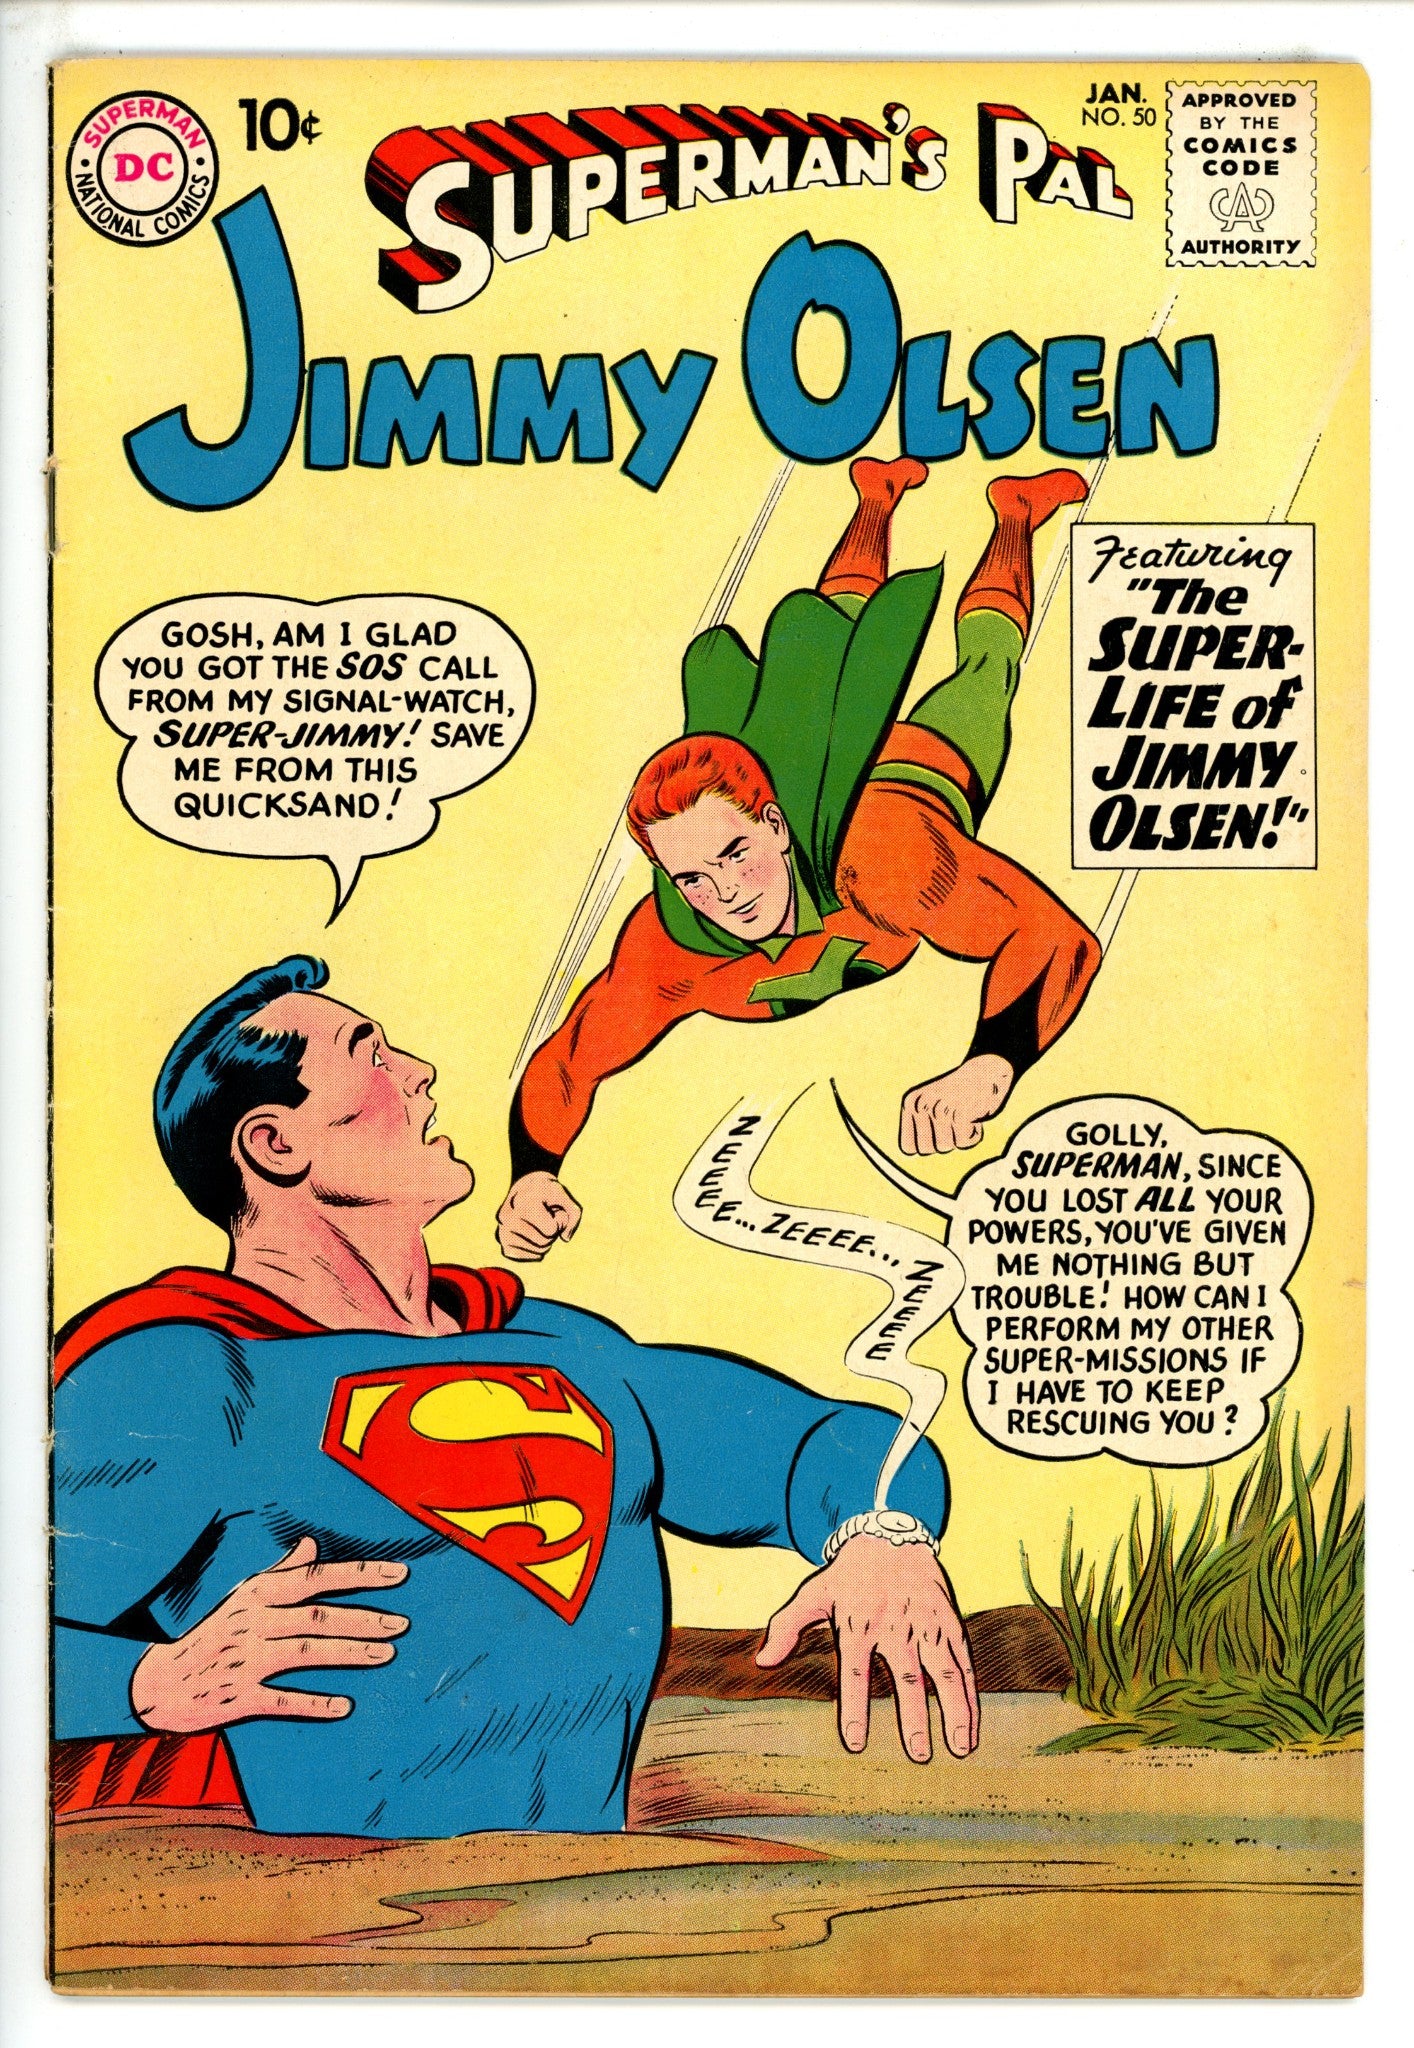 Superman's Pal, Jimmy Olsen 50 VG- (1960)